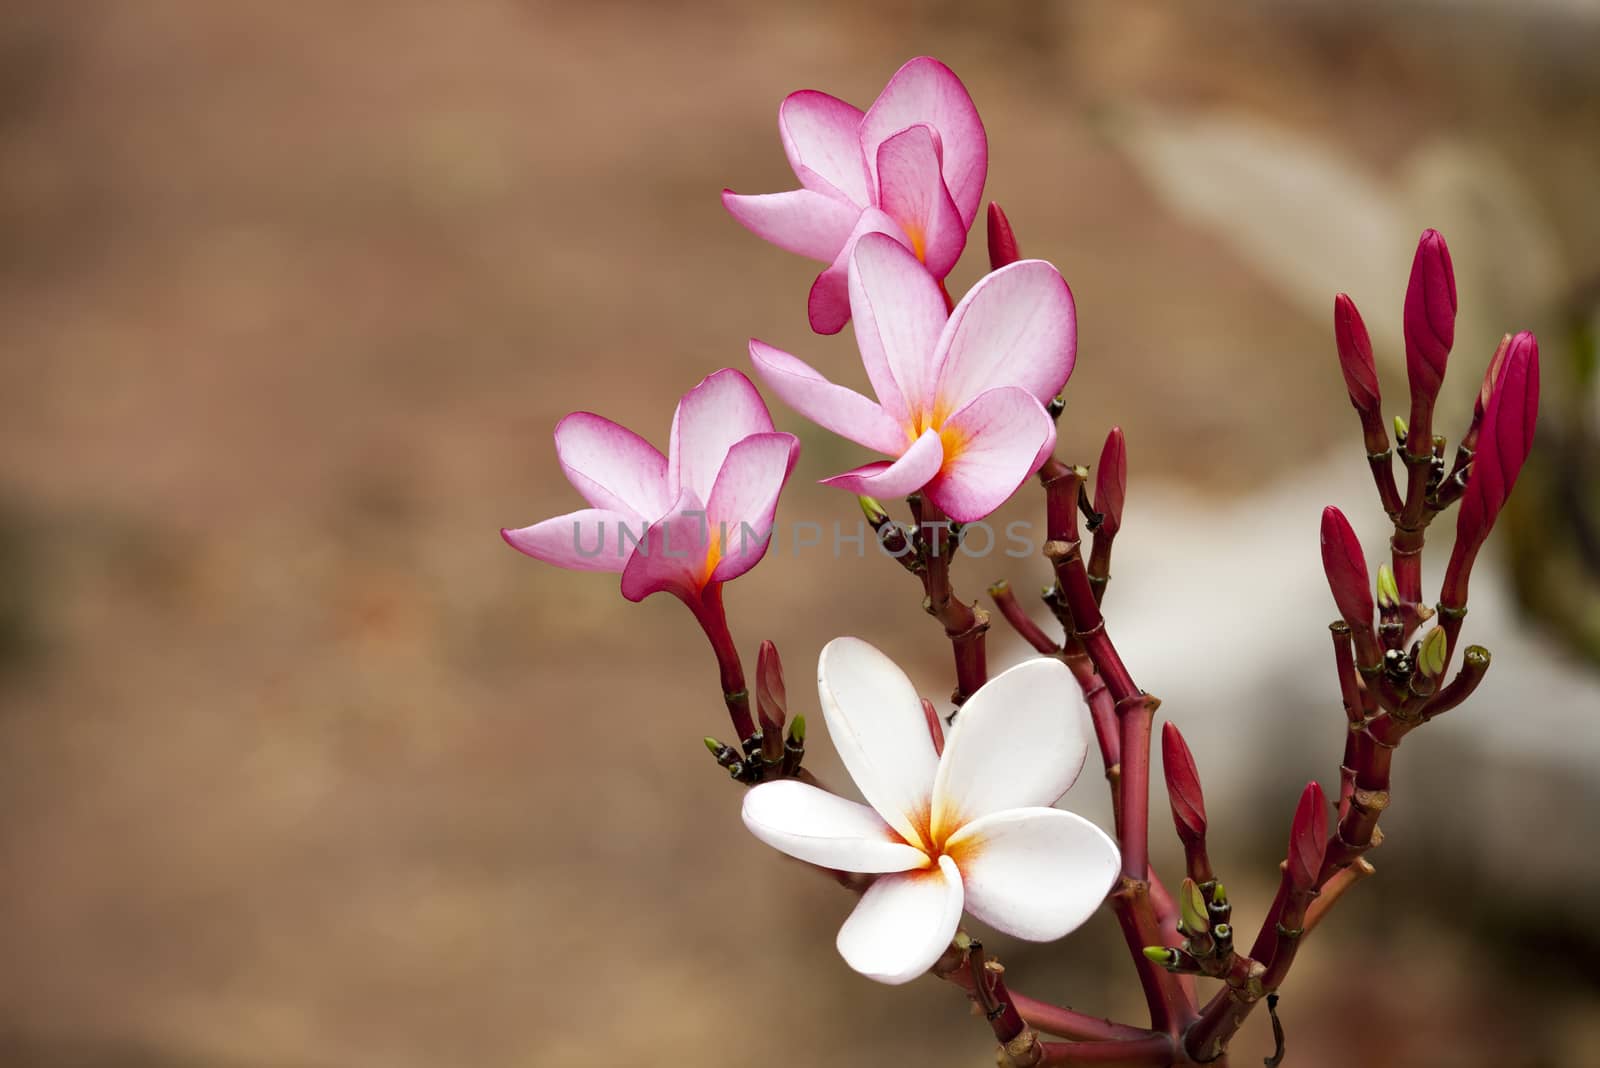 pink frangipani flowers by Chattranusorn09